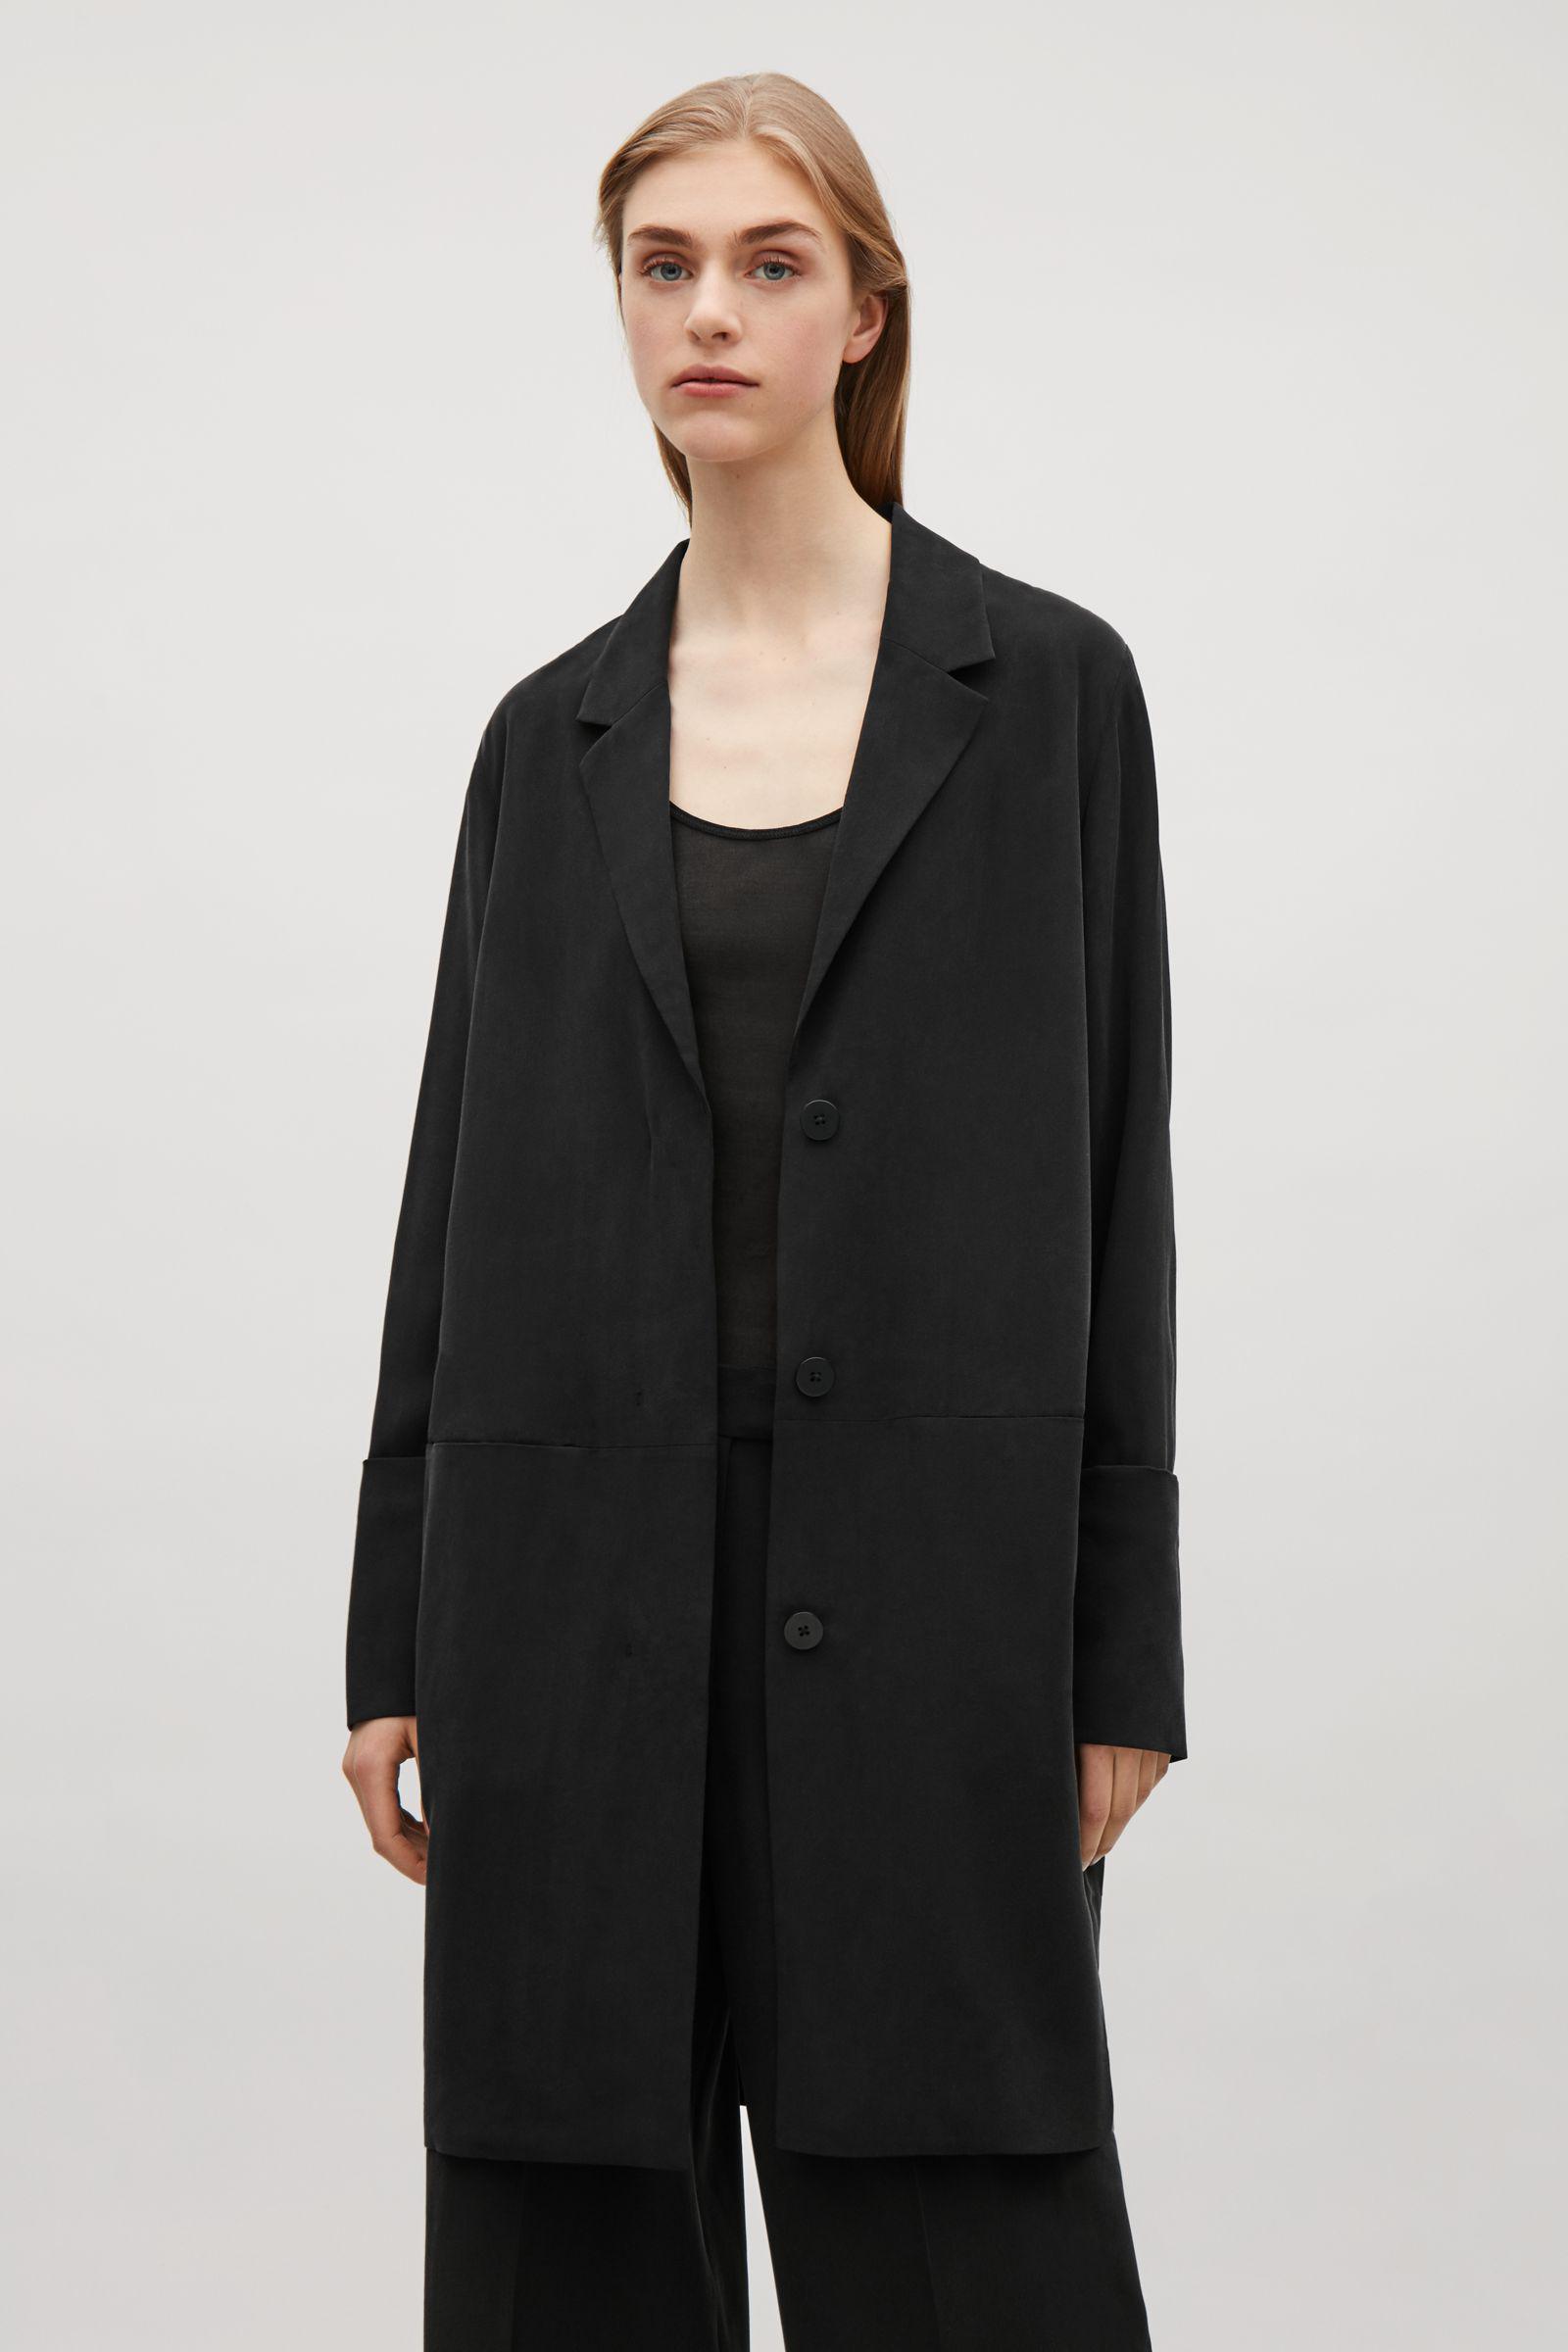 COS Long Silk Blazer in Black | Lyst